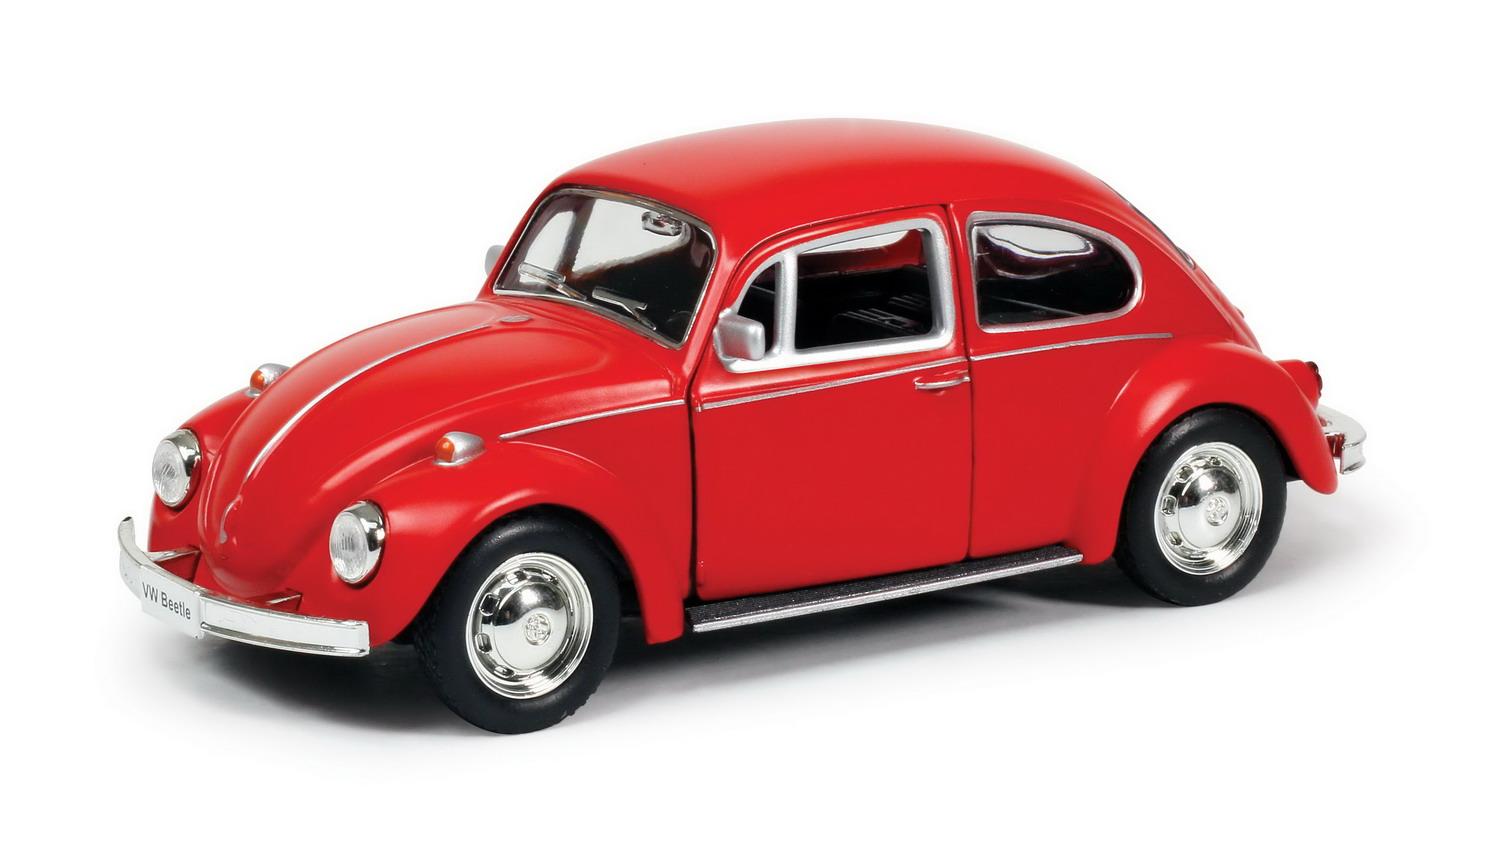 Машина металлическая RMZ City 1:32 Volkswagen Beetle 1967, красный матовый цвет maisto 1 25 volkswagen new beetle alloy car model die casting static precision model collection gift toy tide play